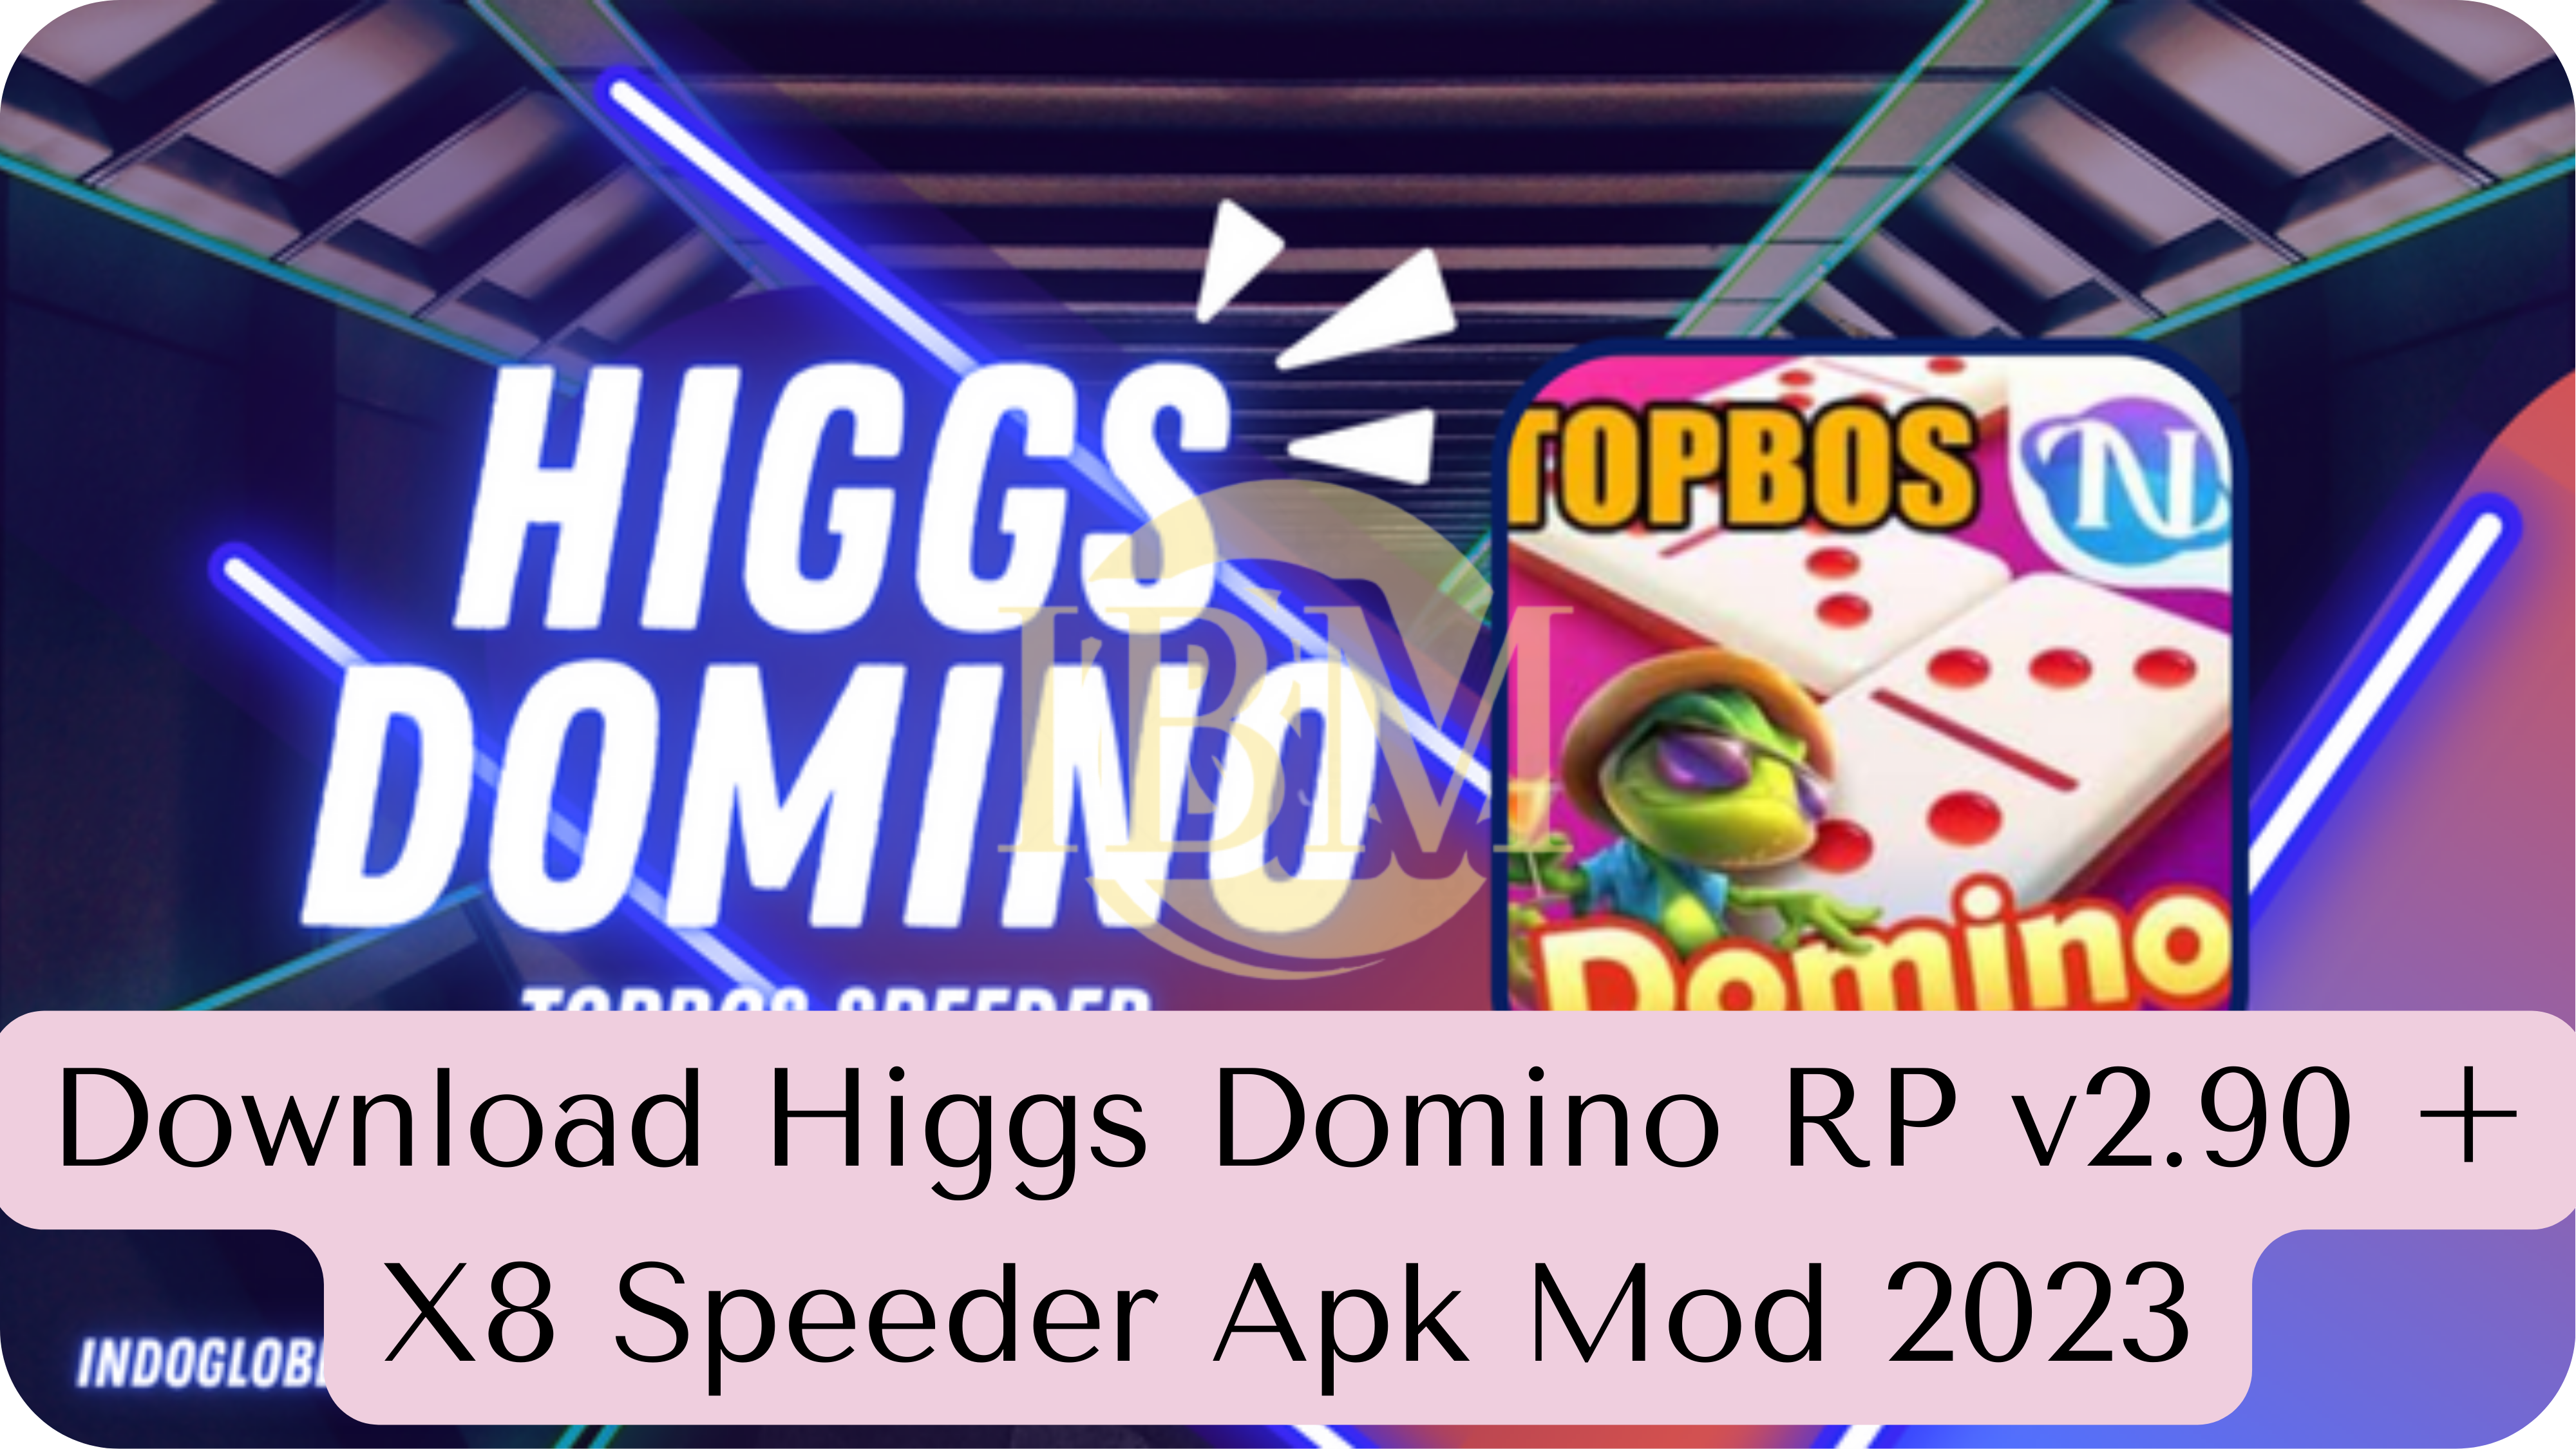 Download Higgs Domino RP v2.90 + X8 Speeder Apk Mod 2023